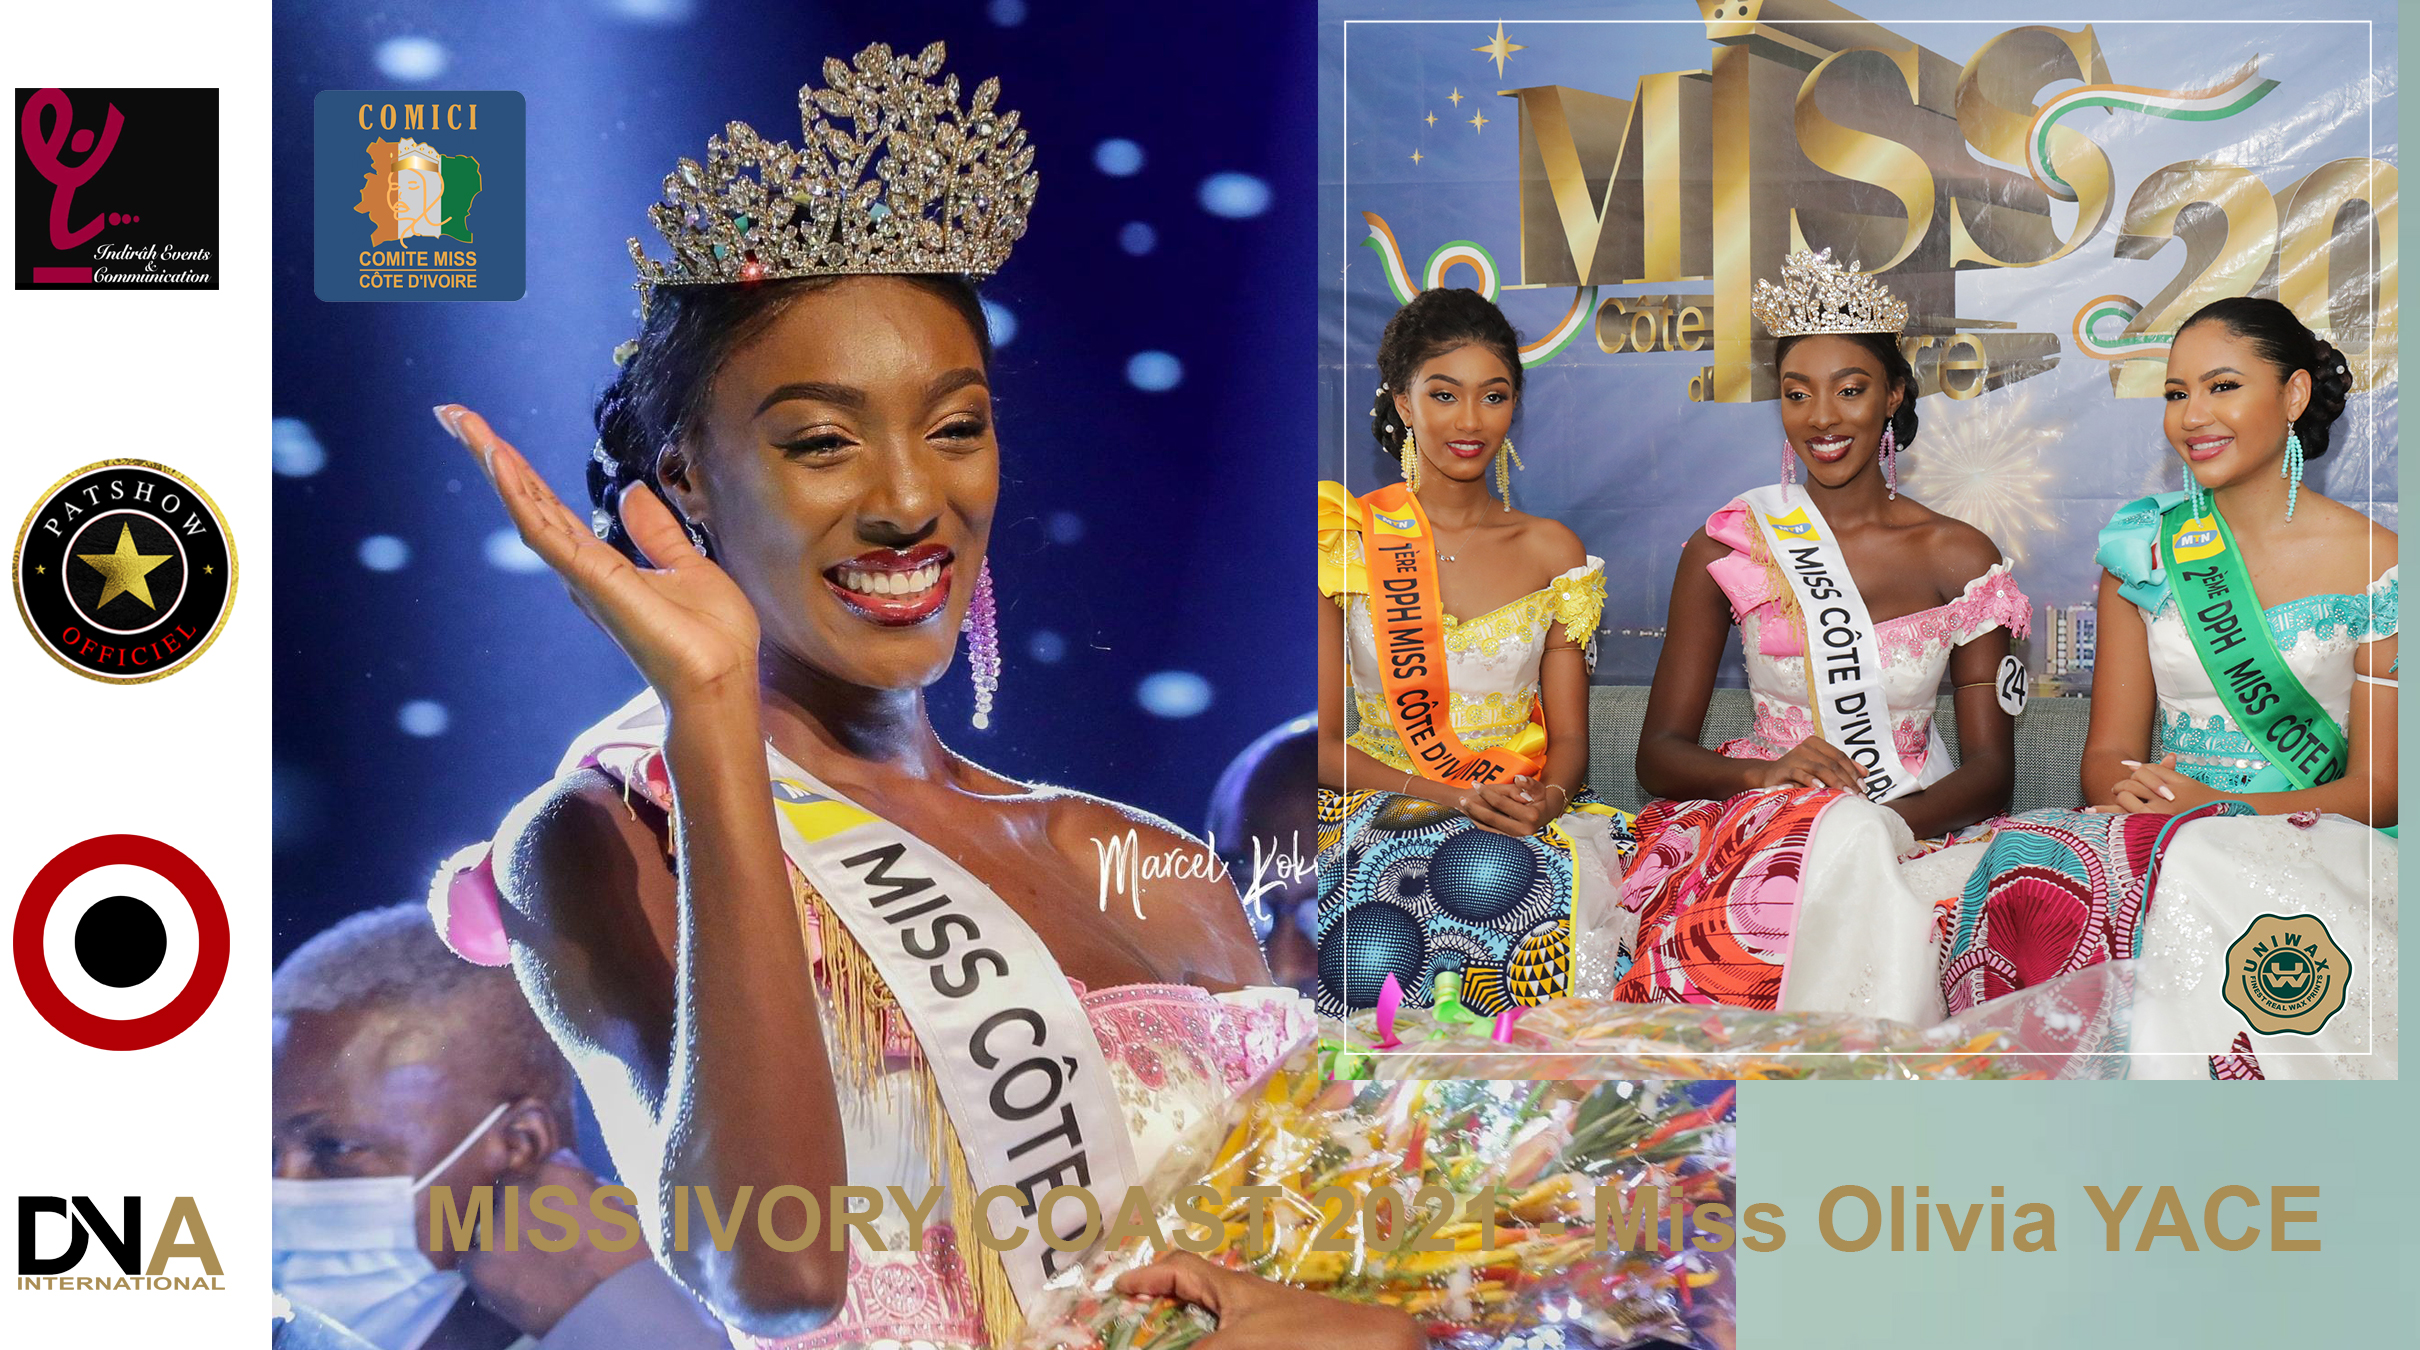 AFRICA-VOGUE-COVER-MISS-IVORY-COAST-2021-Miss-Olivia-YACE-DN-AFRICA-DN-A-INTERNATIONAL-Media-Partner